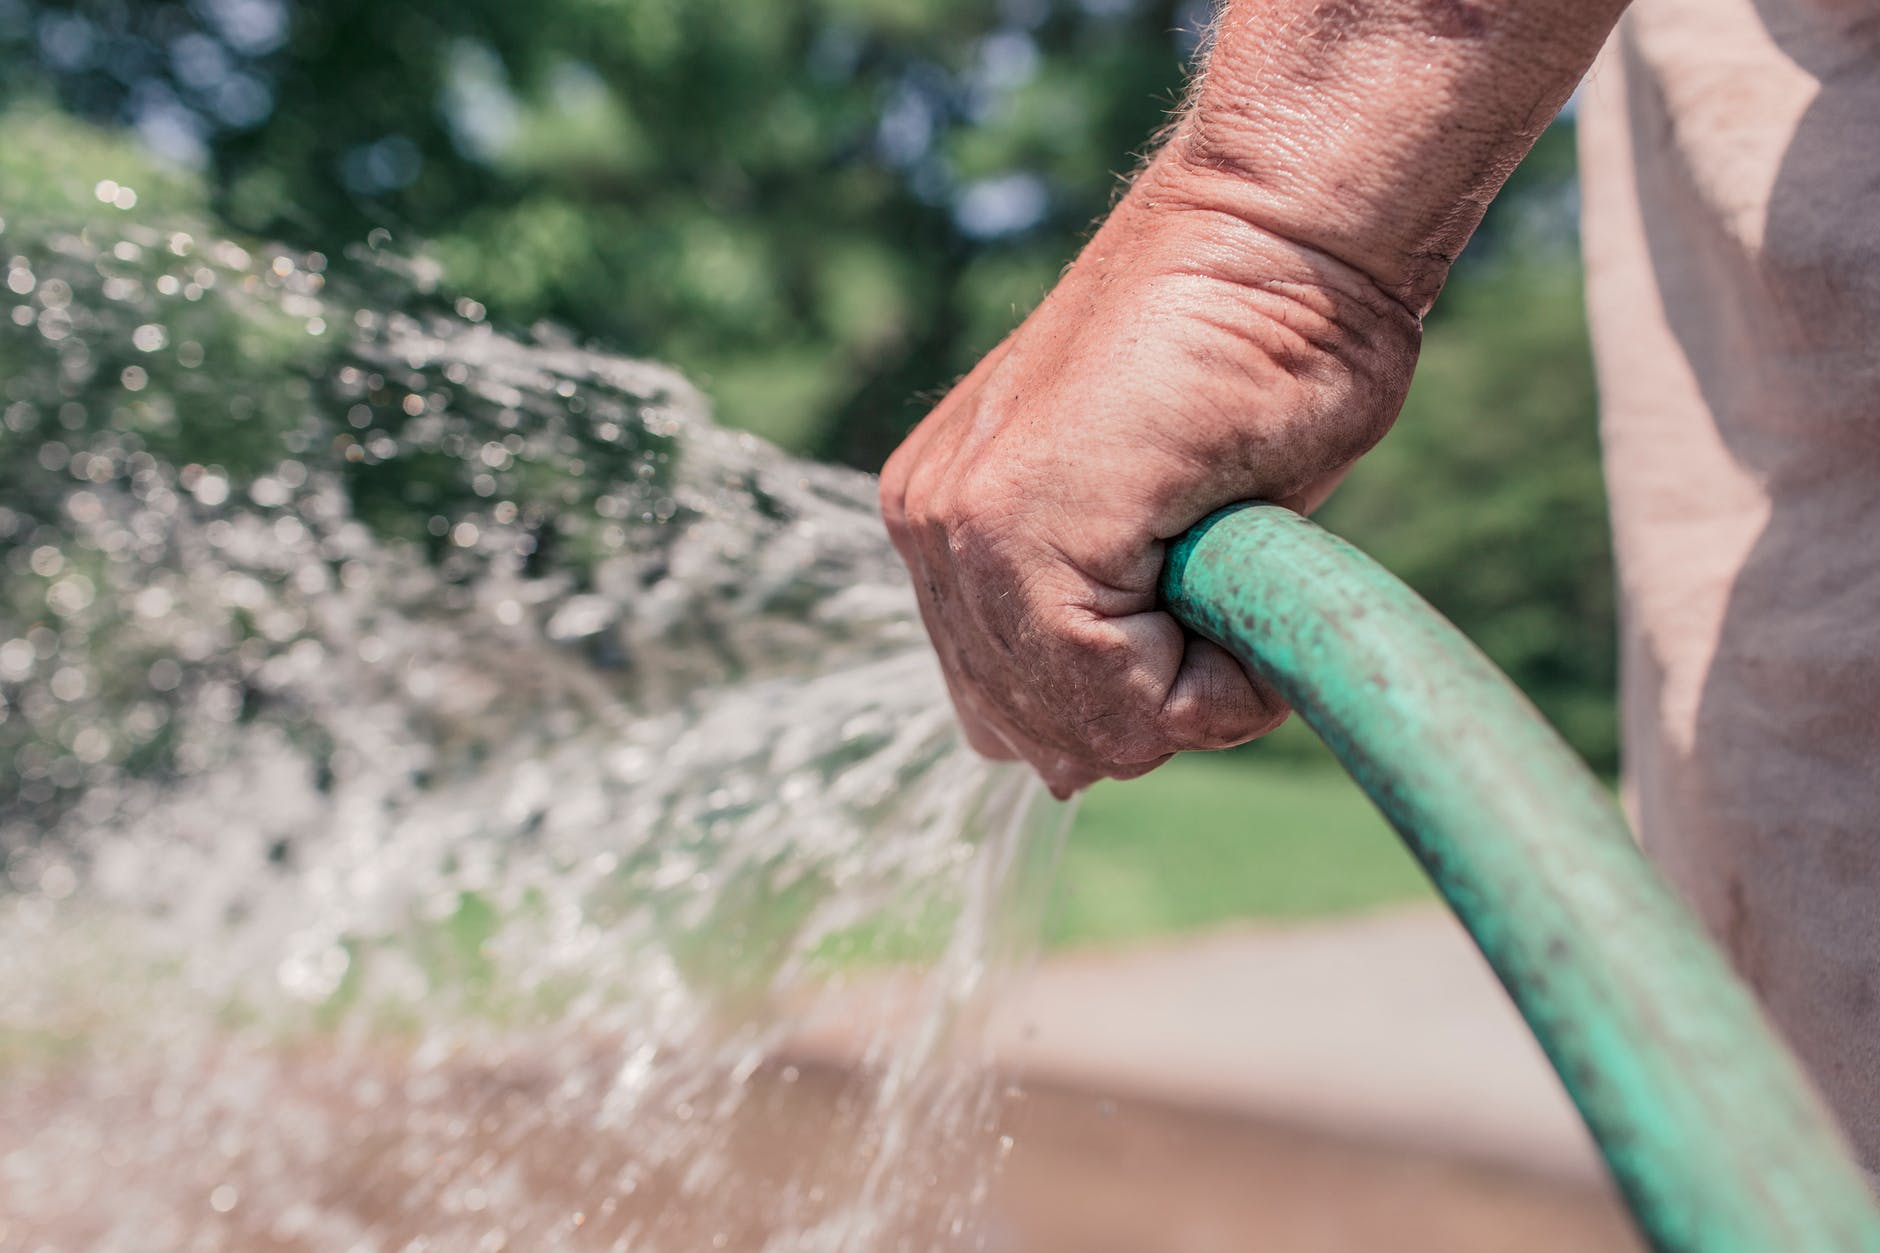 Beat the Heat Watering Tips from Sharon Burnette, Hopkins County Master Gardener